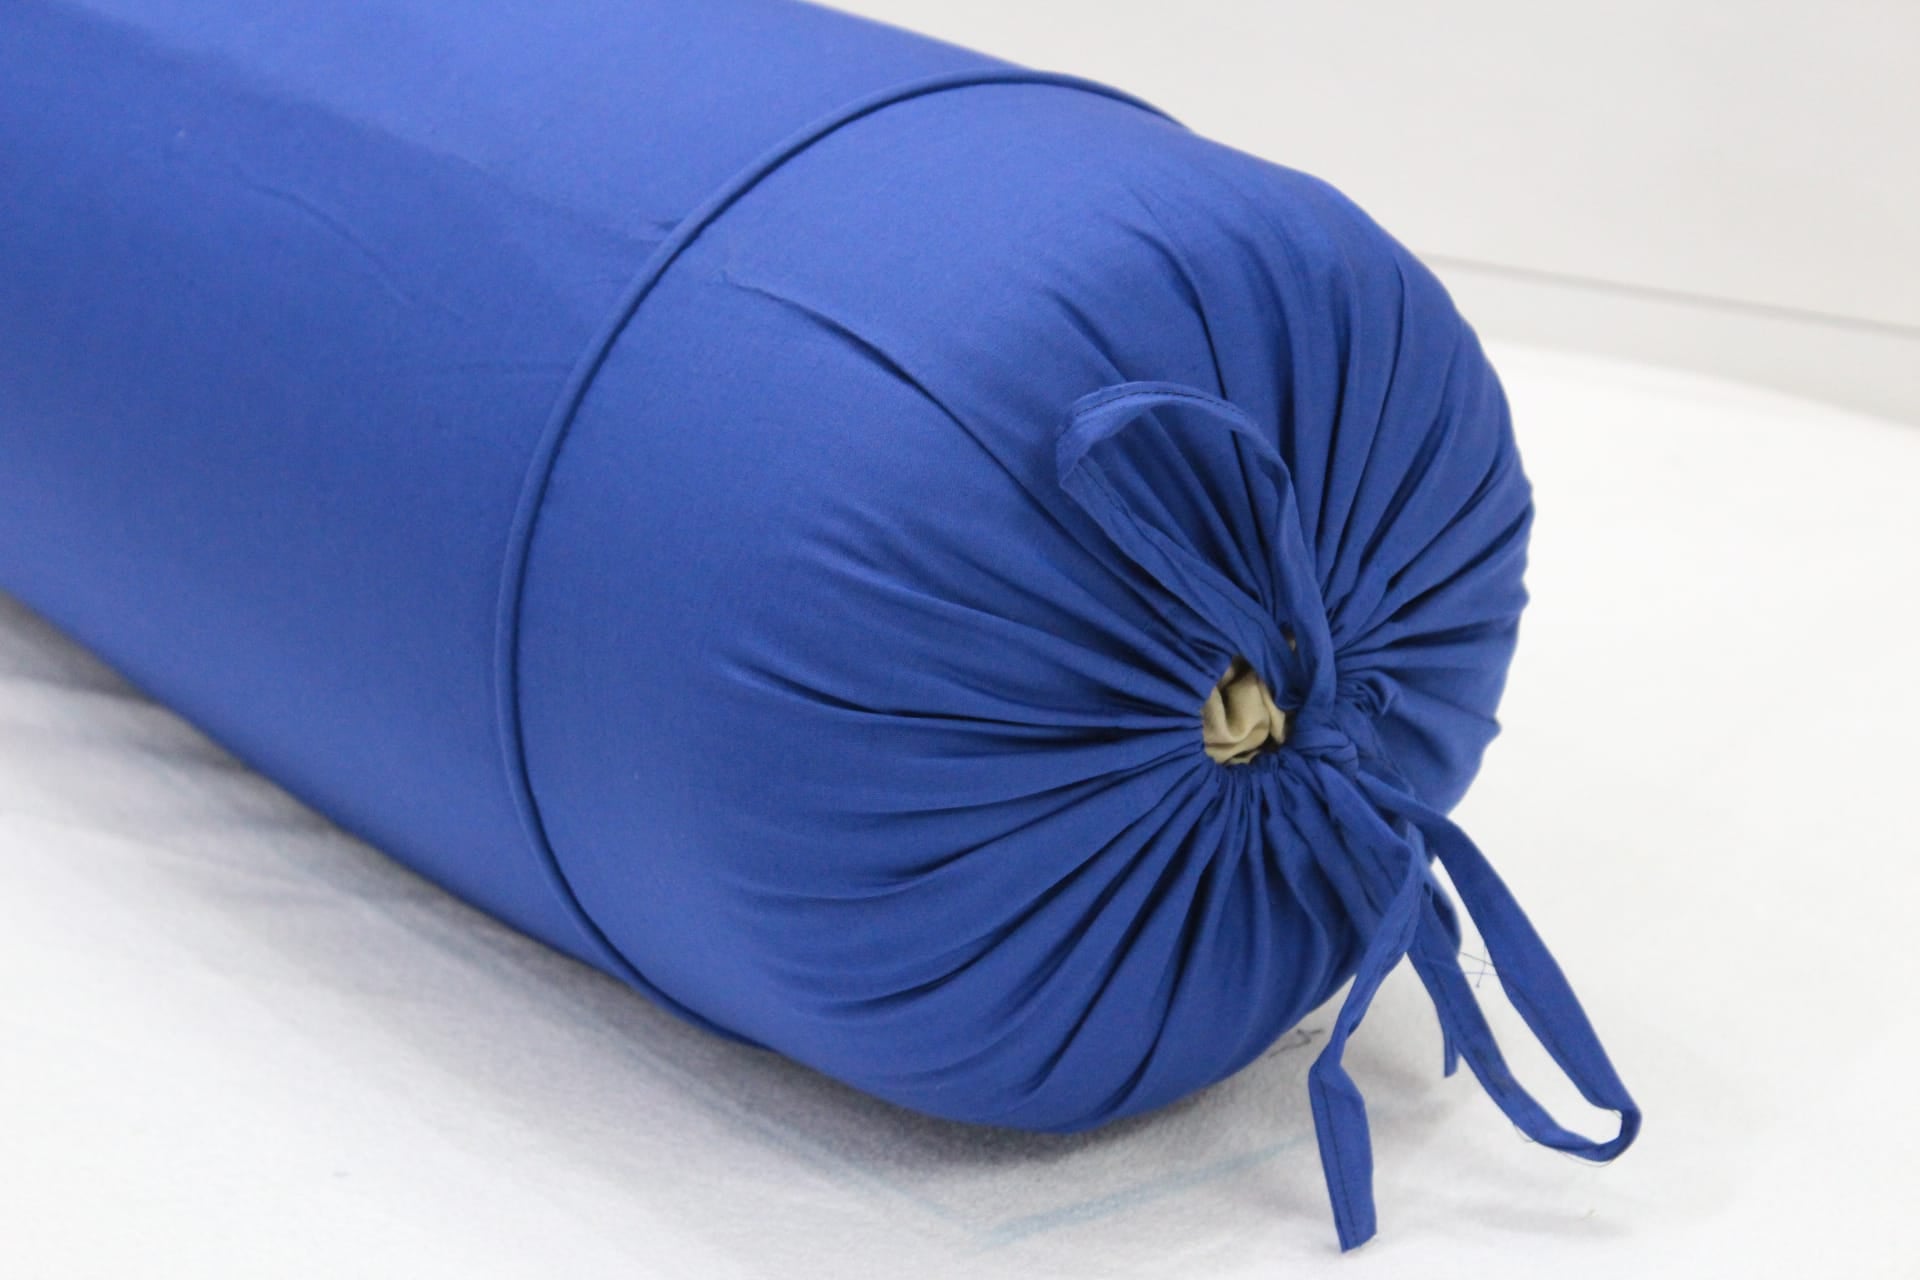 Soft Plain Cotton Bolster Cover Set in Marine Blue online - 2Pcs